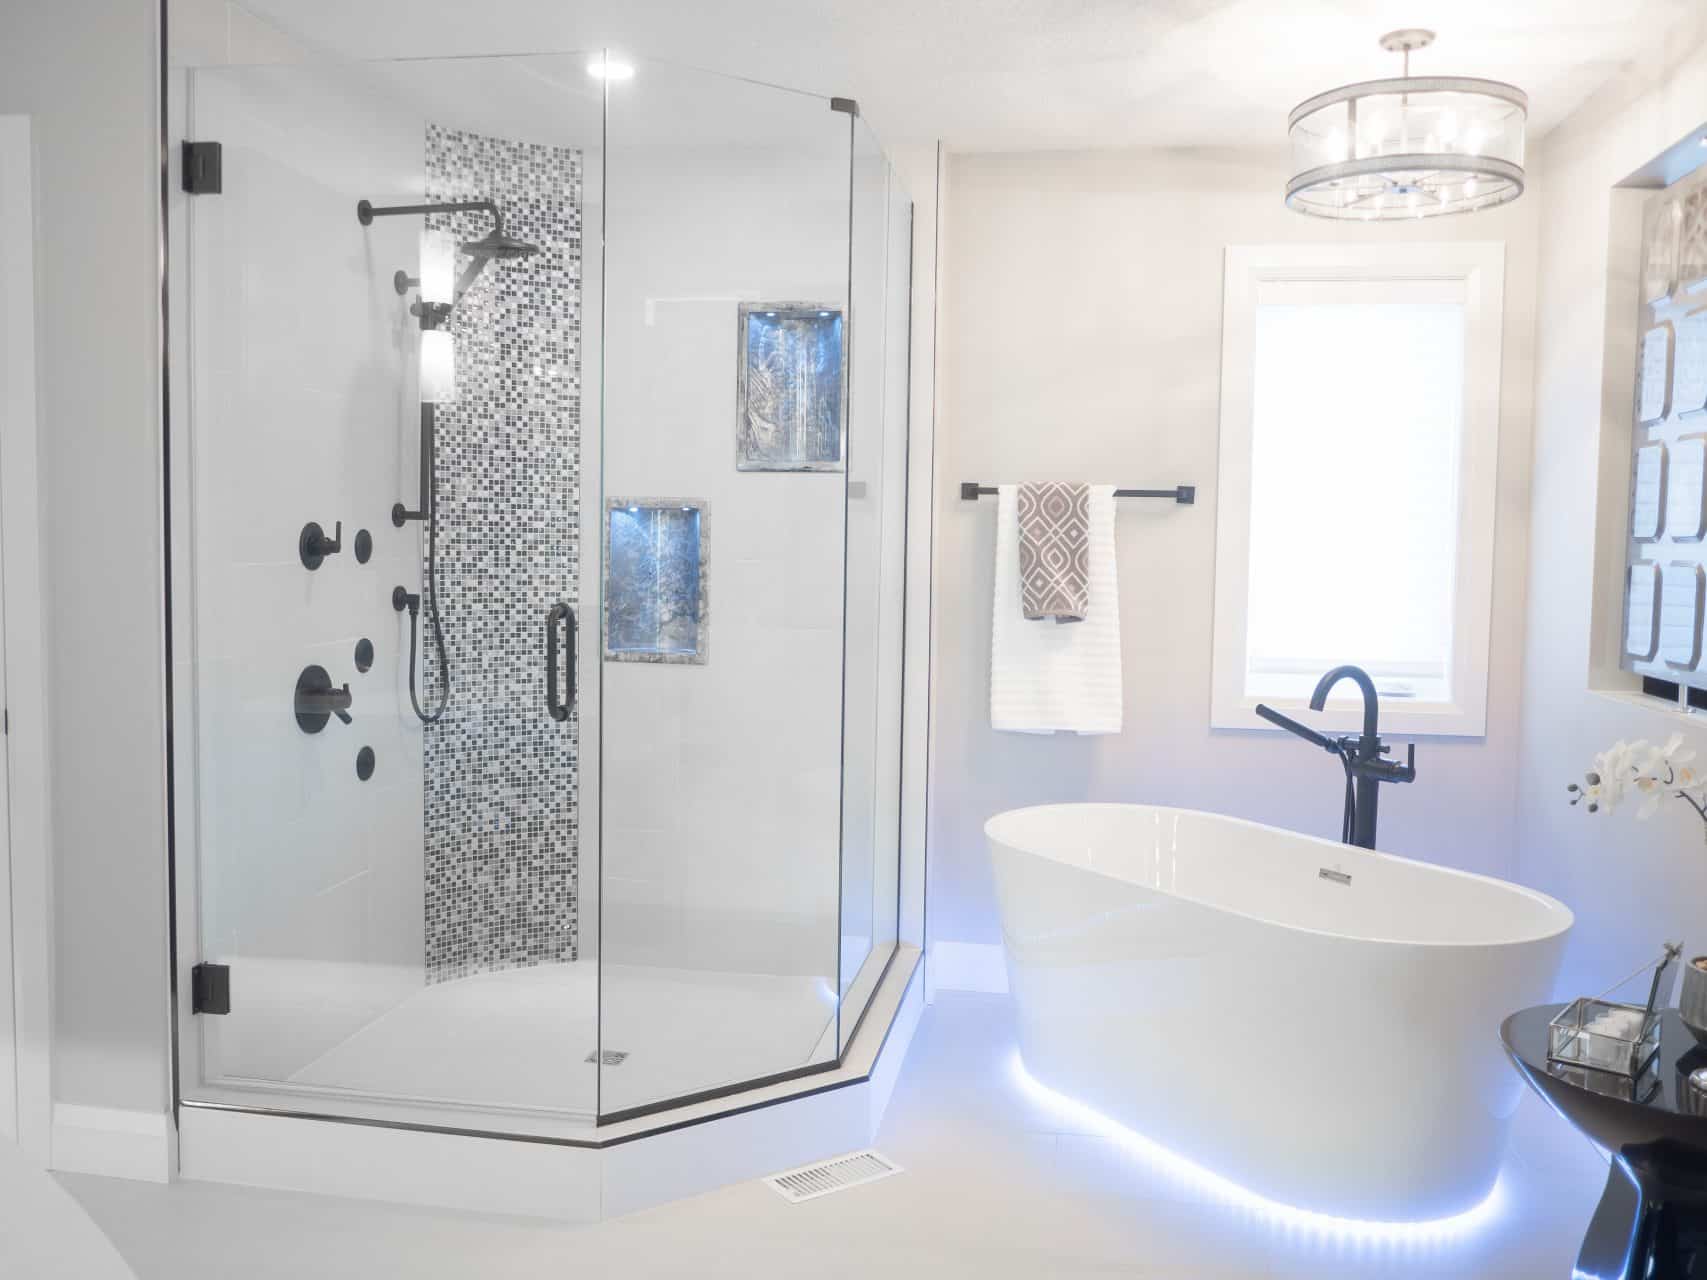 tall glass shower and deep bathtub with glow lights around it